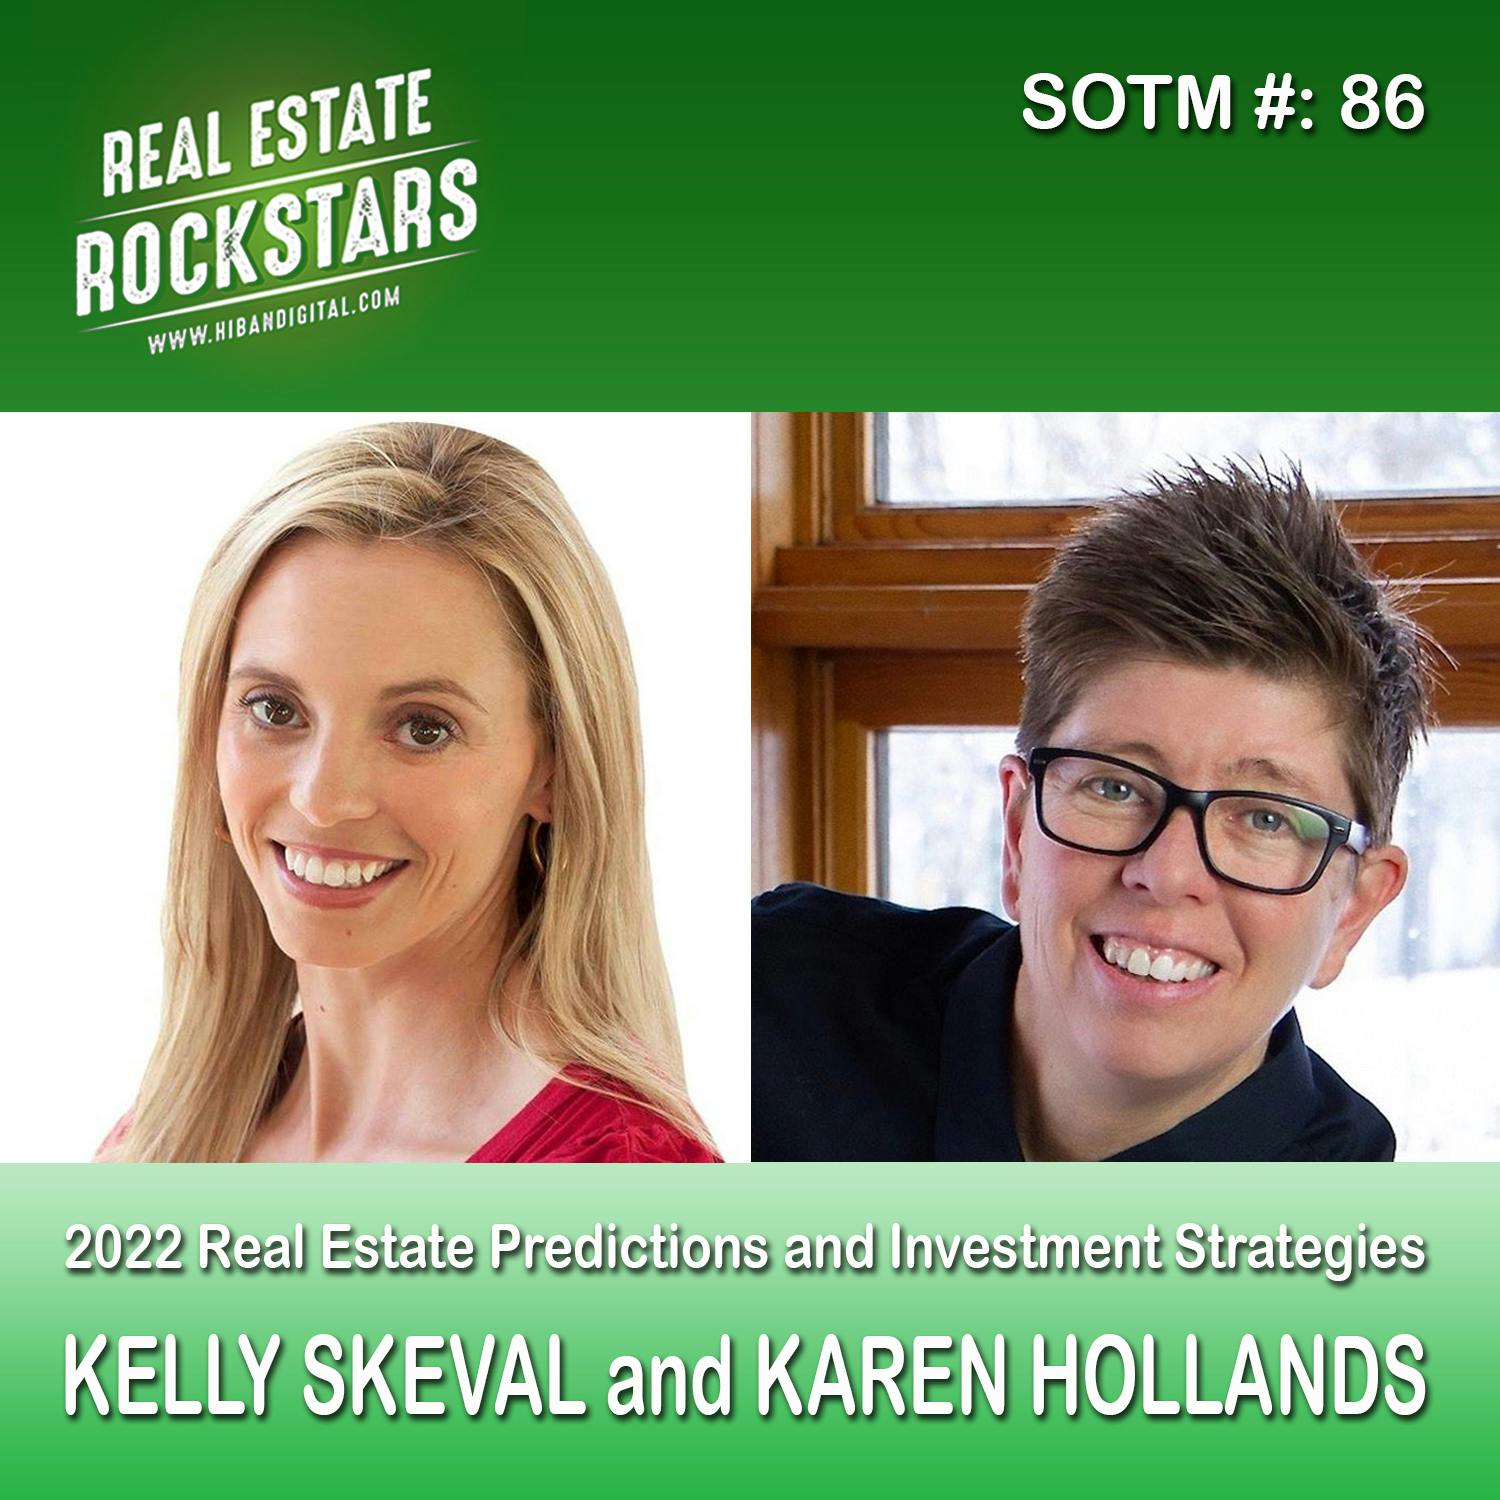 SOTM 86: 2022 Real Estate Predictions and Investment Strategies - Kelly Skeval and Karen Hollands